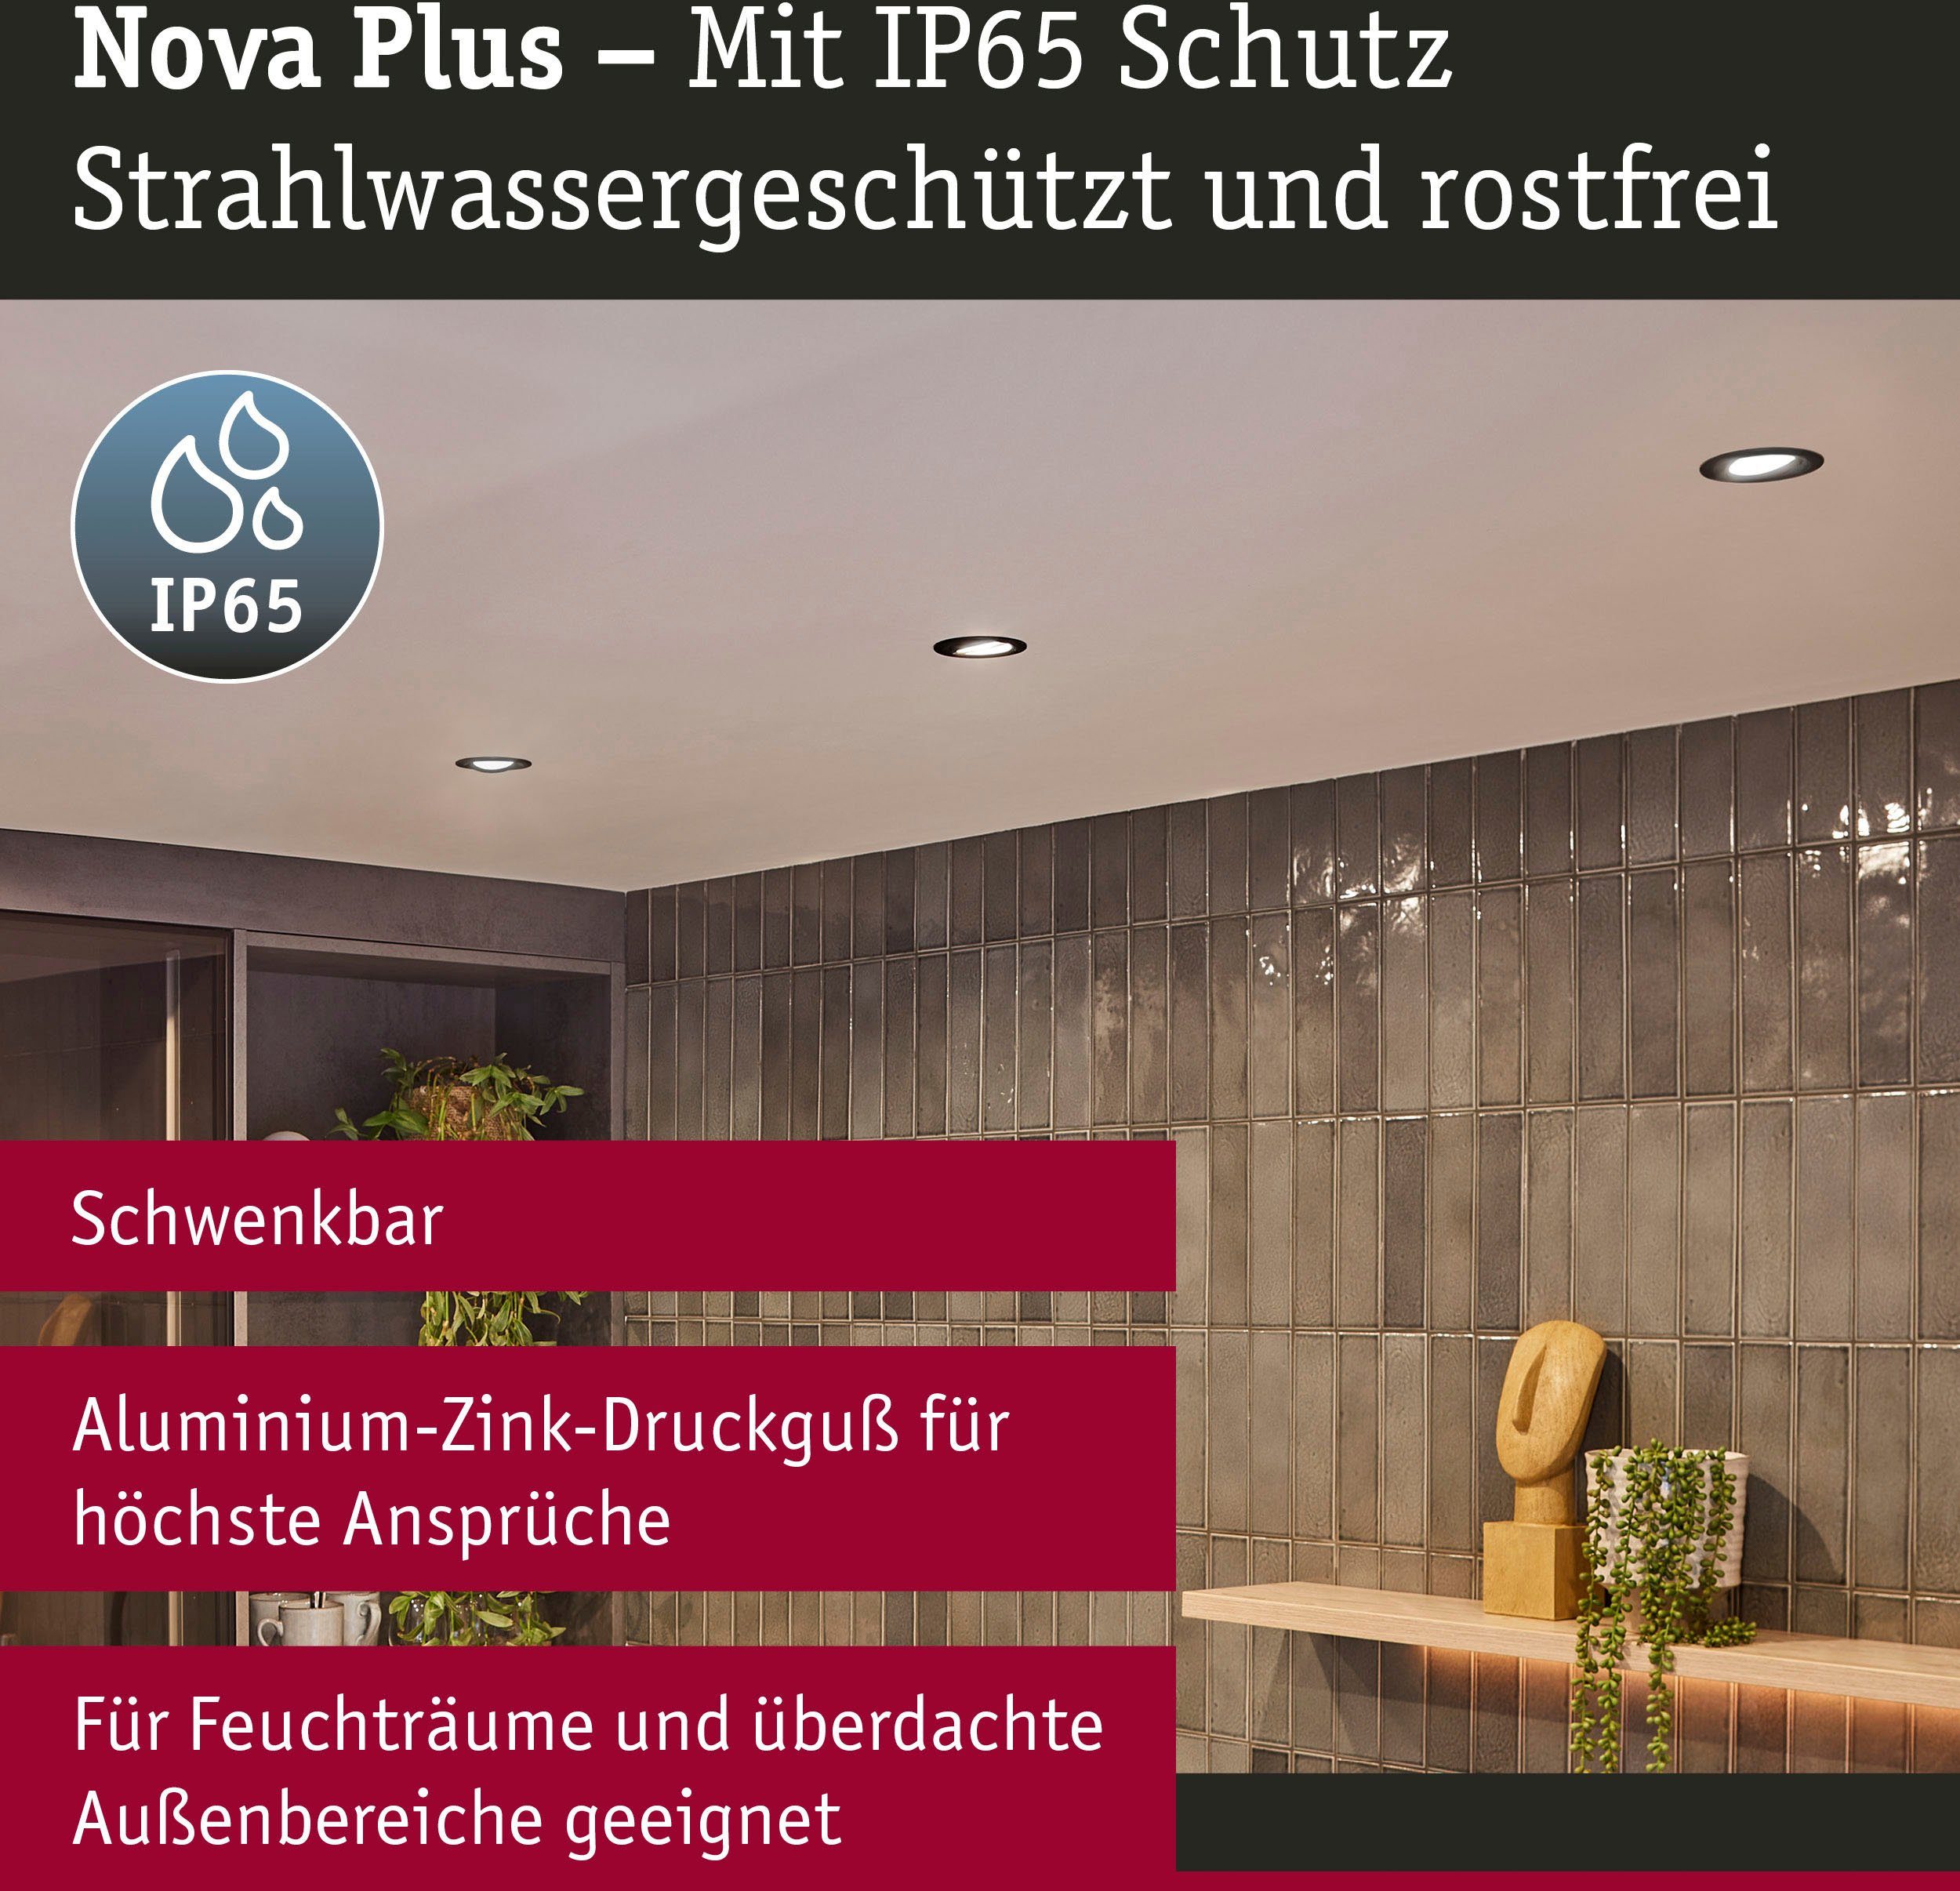 Paulmann LED Einbauleuchte Nova 1x35W ohne Leuchtmittel Schwarz Zink, matt/Alu Plus